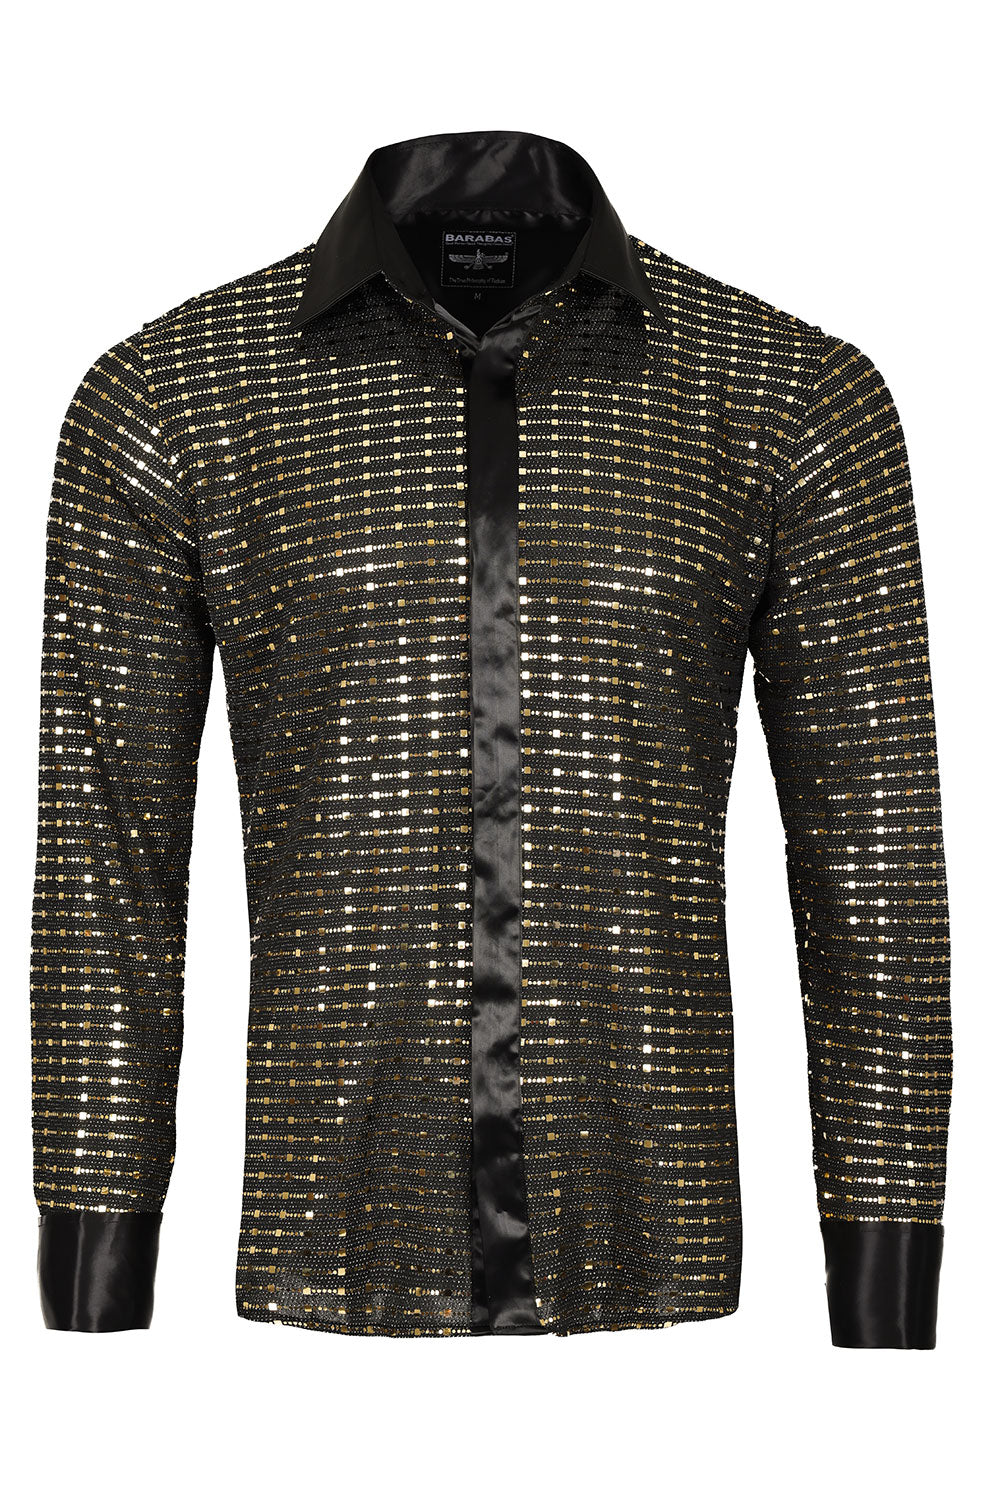 Barabas Men's French Cuff Glittery Sparkly Shiny Shirt 2FCS1005  Gold Black